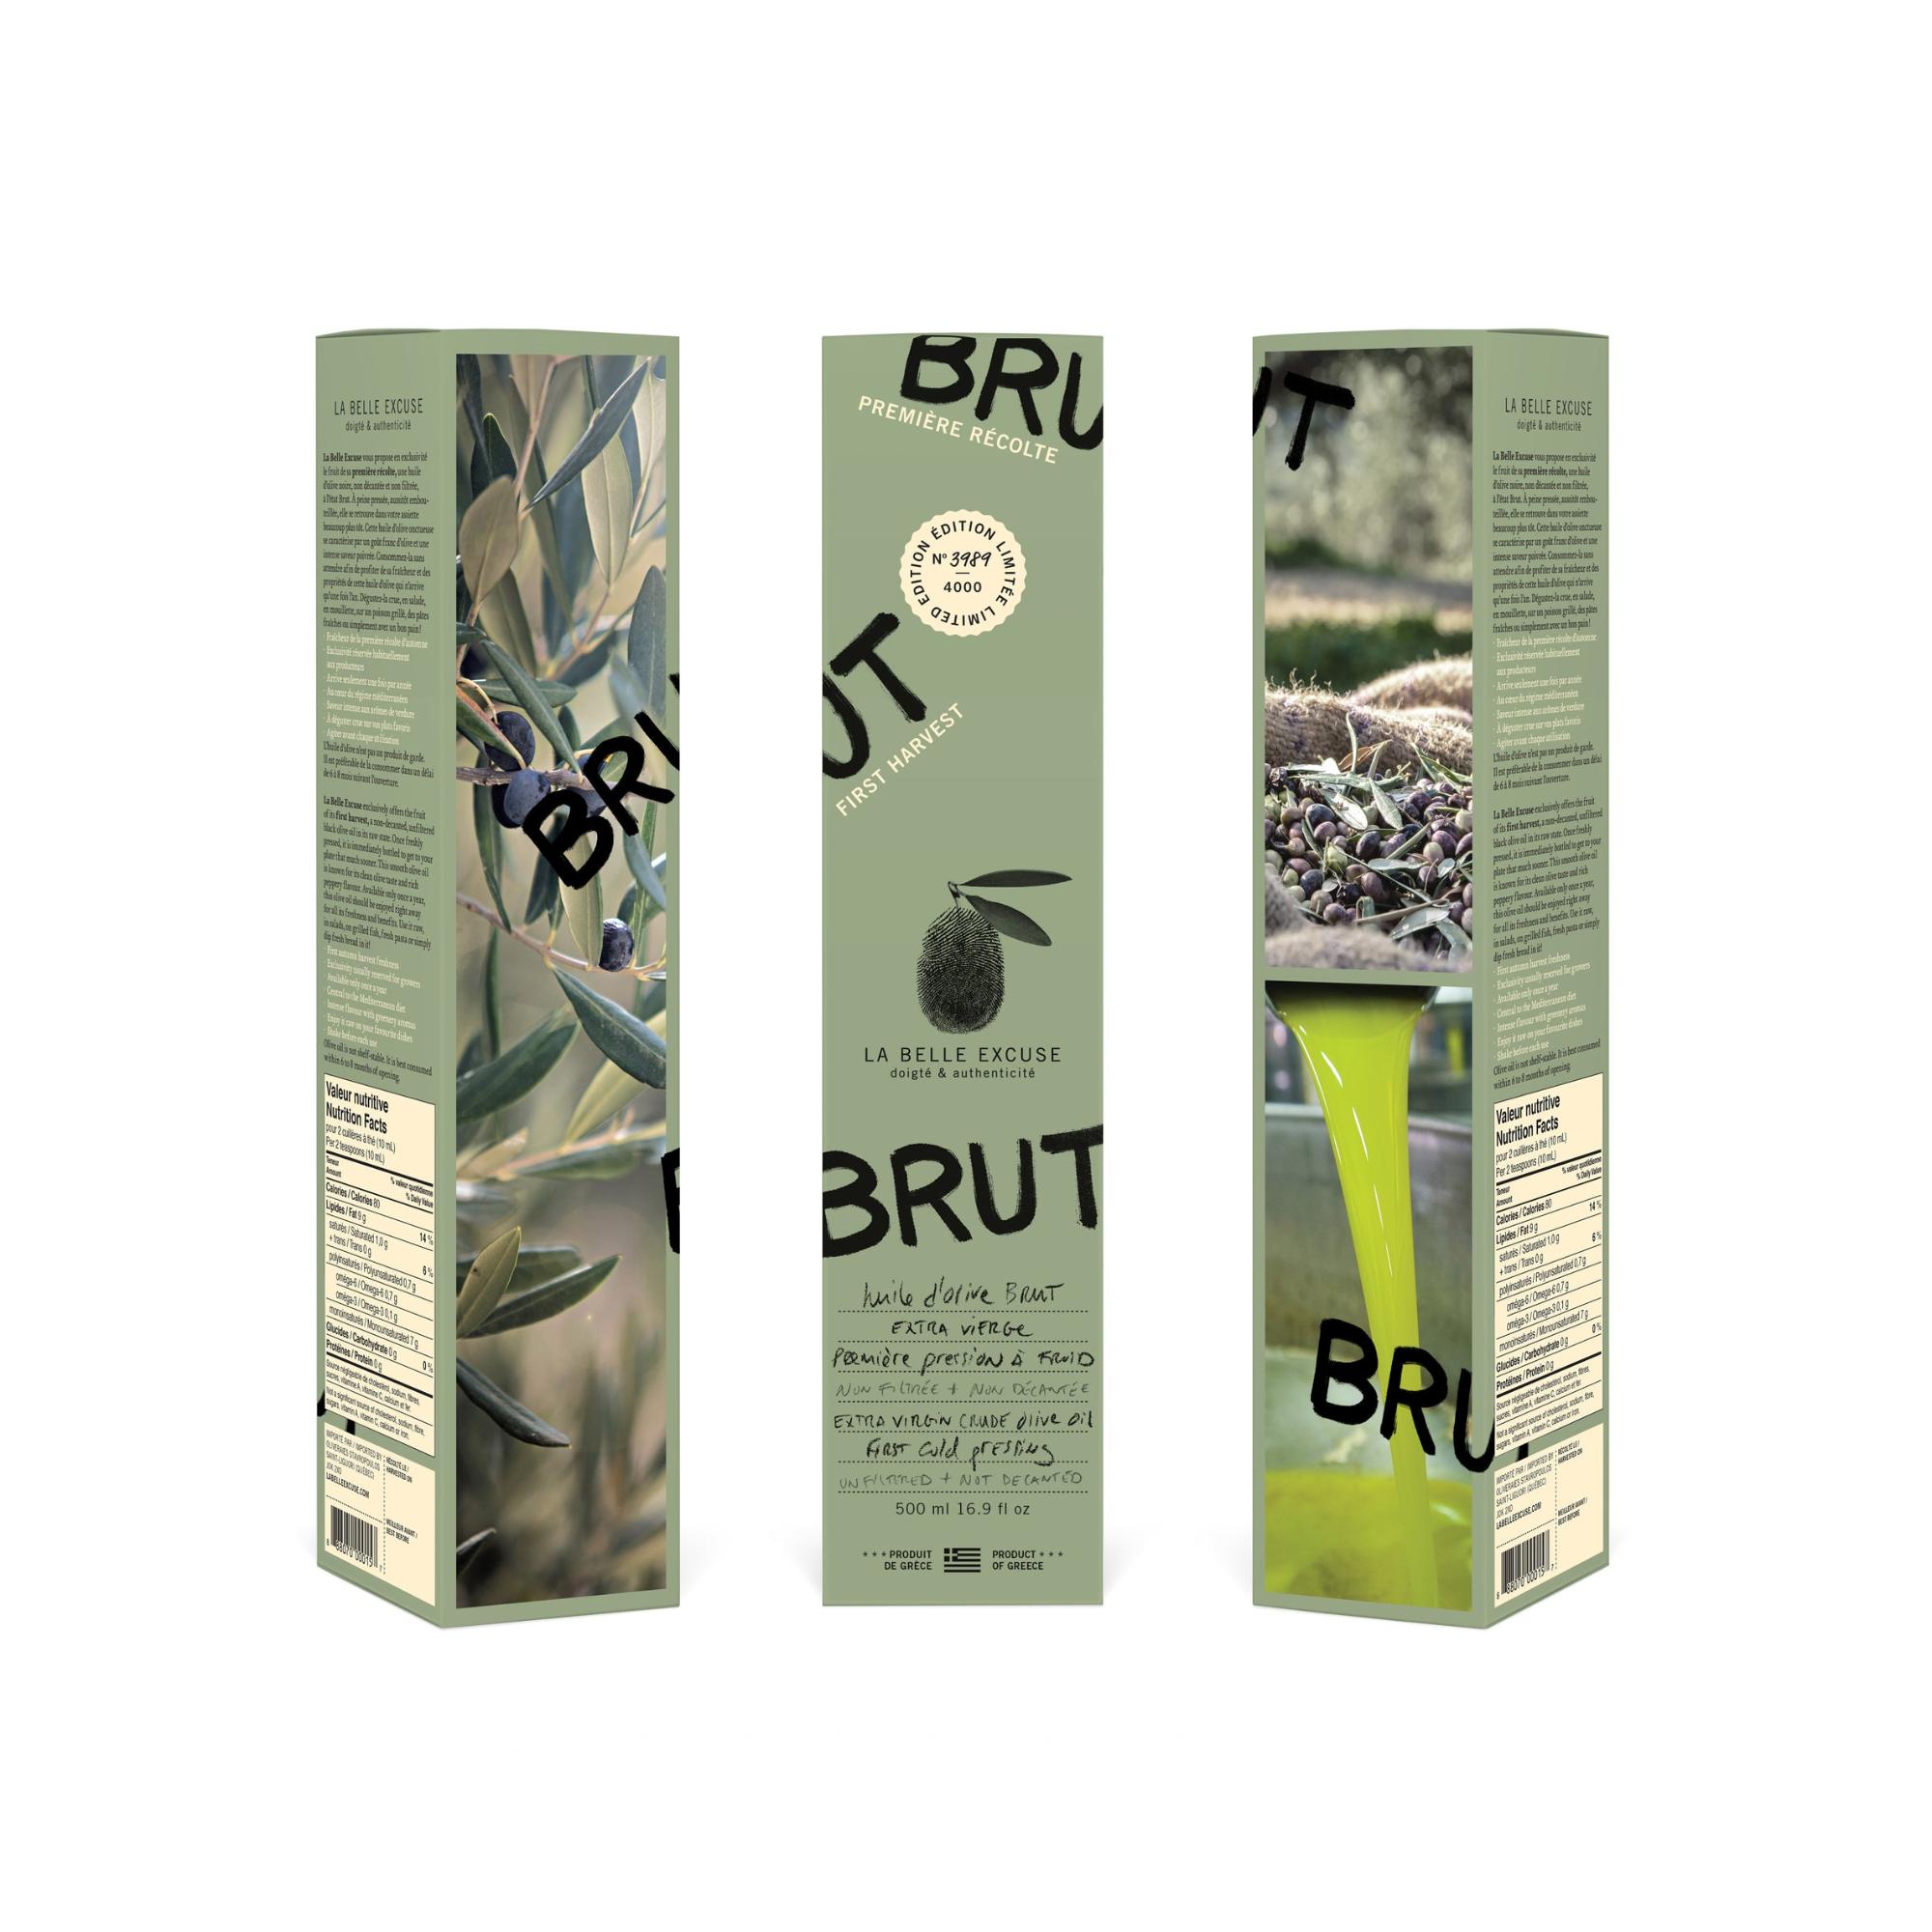 Huile d'olive extra vièrge en spray 250ml – Urban Palate - Papille Urbaine